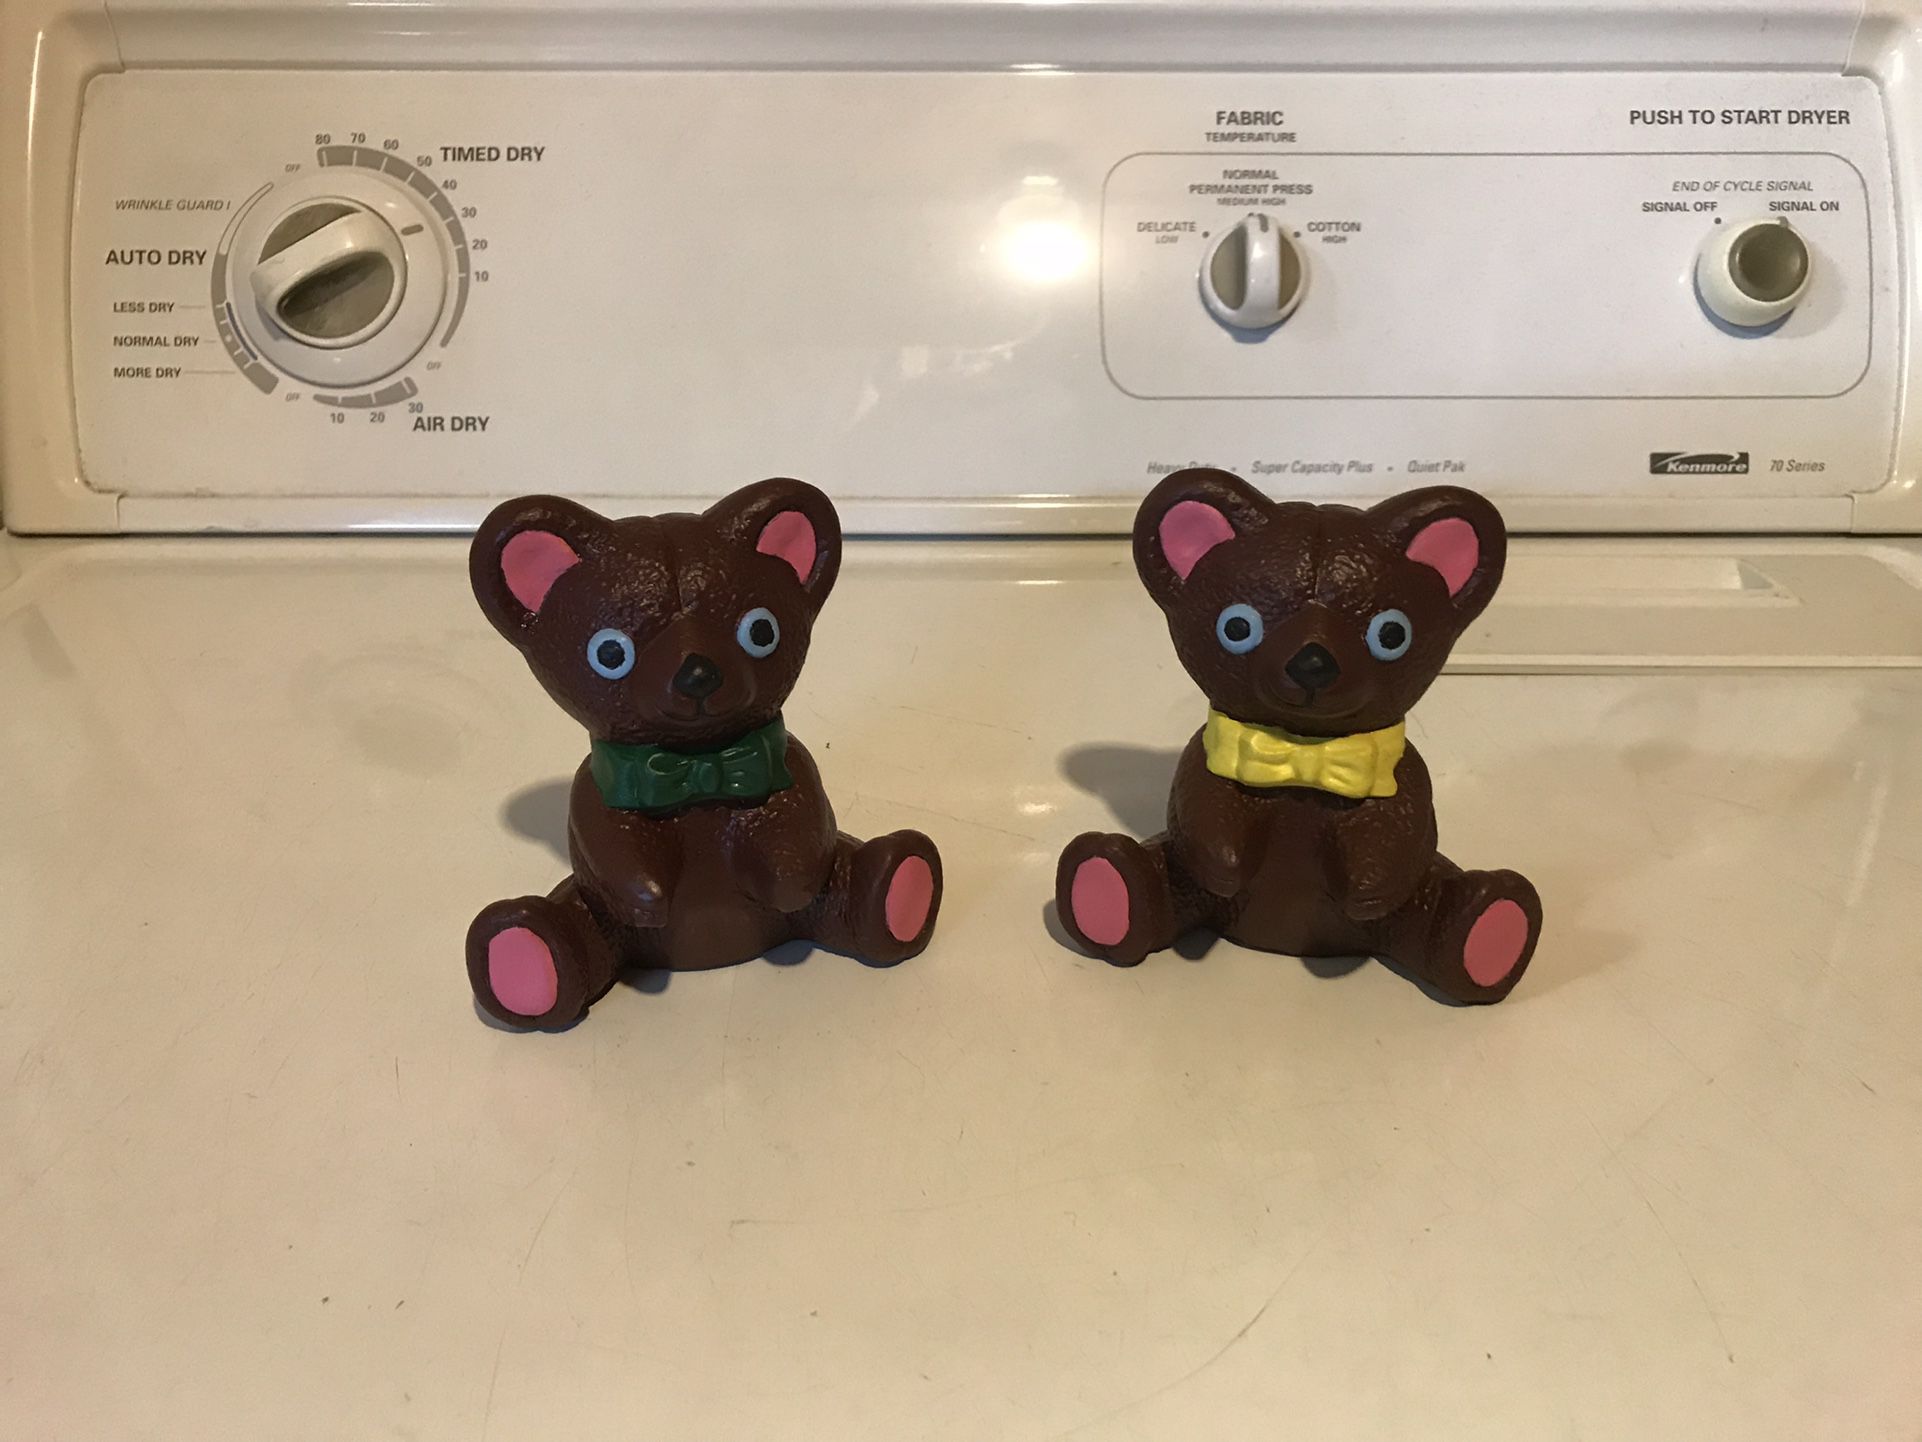 Two 4 1/2” ceramic teddy bears